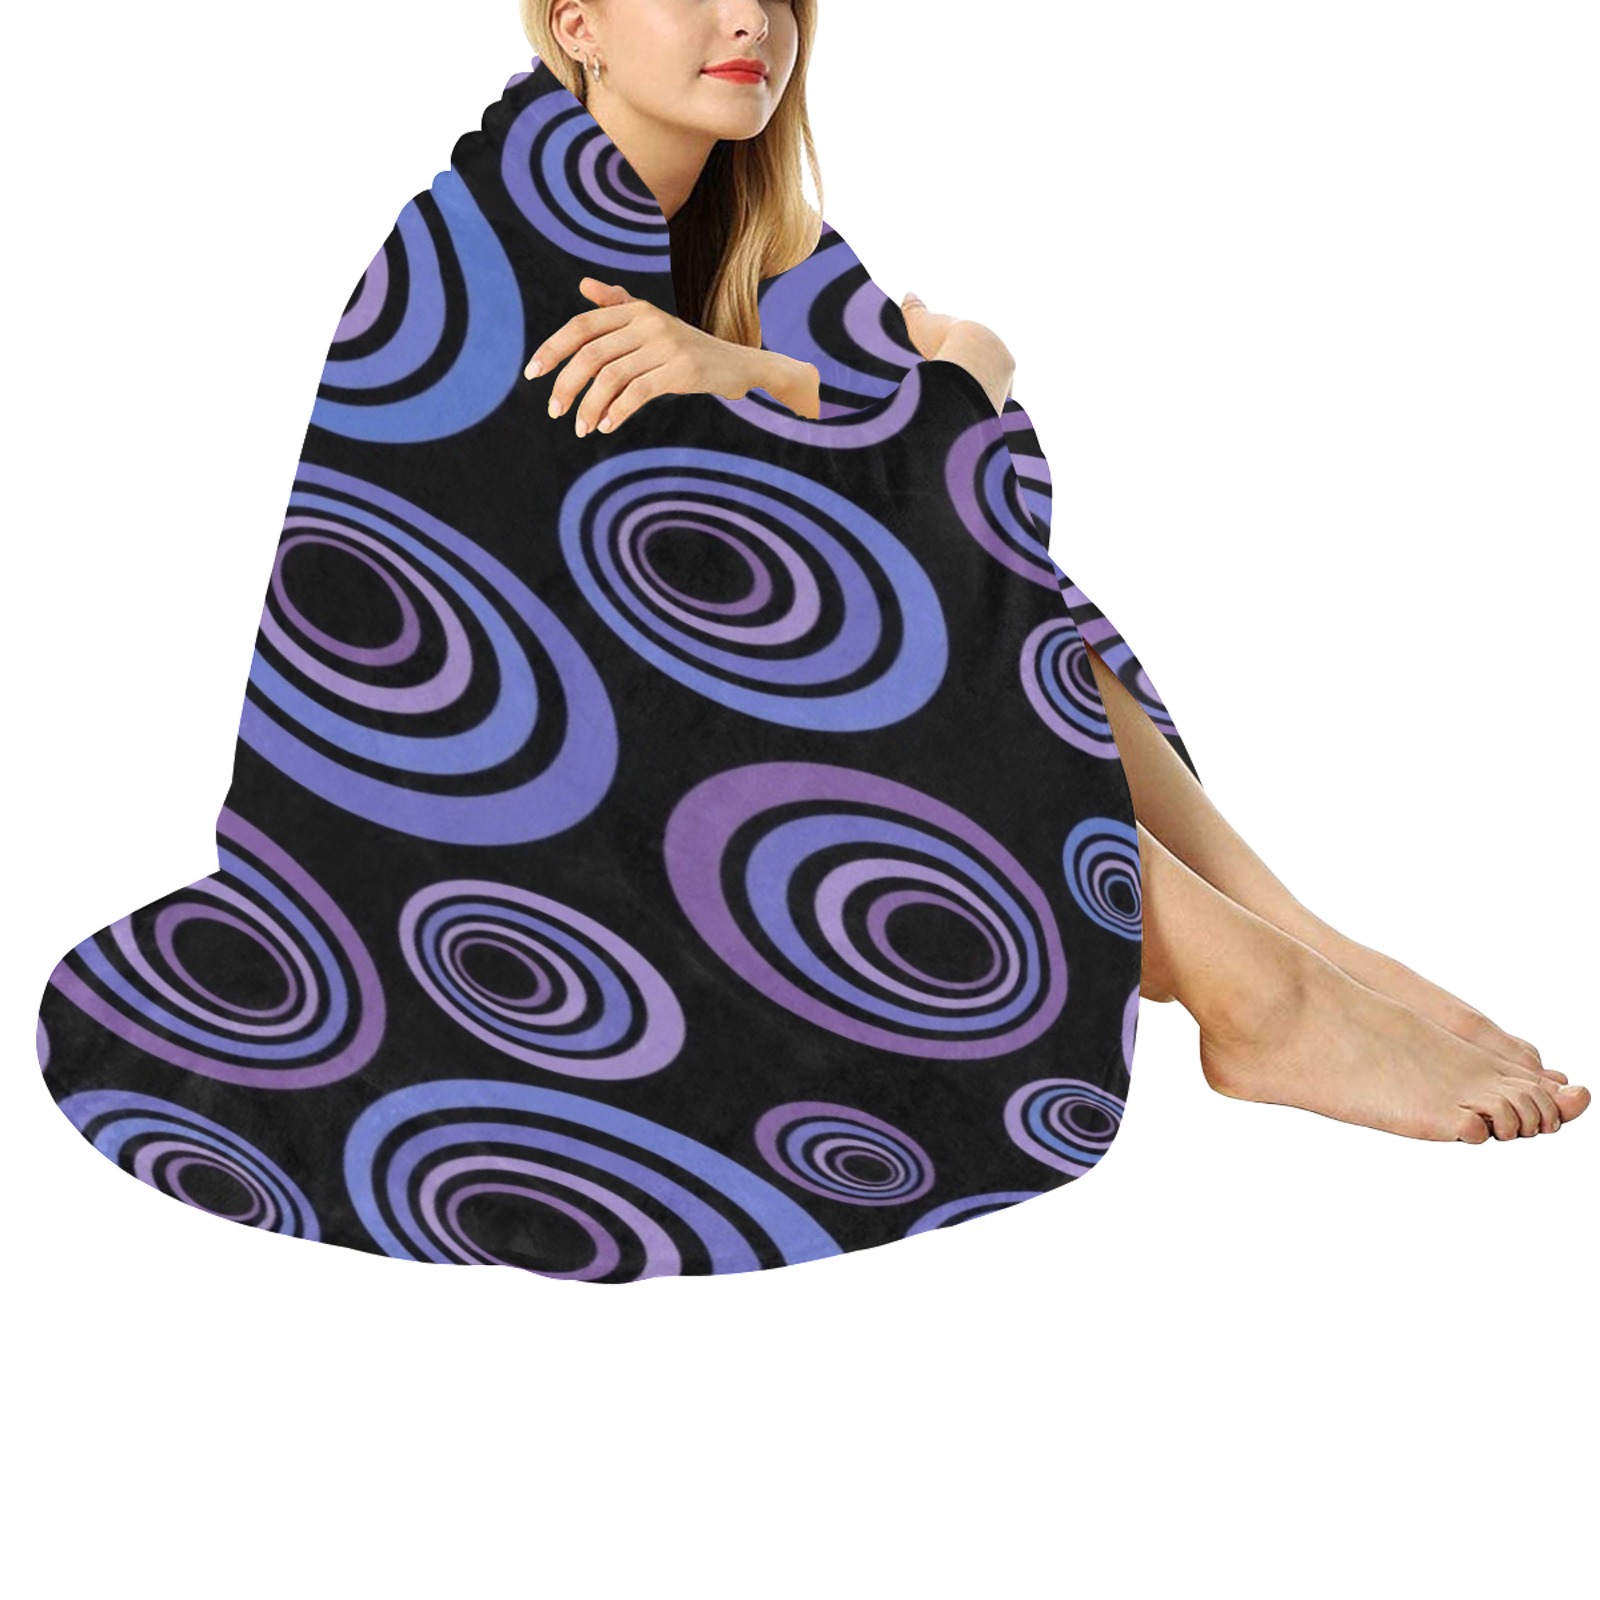 Retro Psychedelic Pretty Purple Pattern Circular Ultra-Soft Micro Fleece Blanket 60"